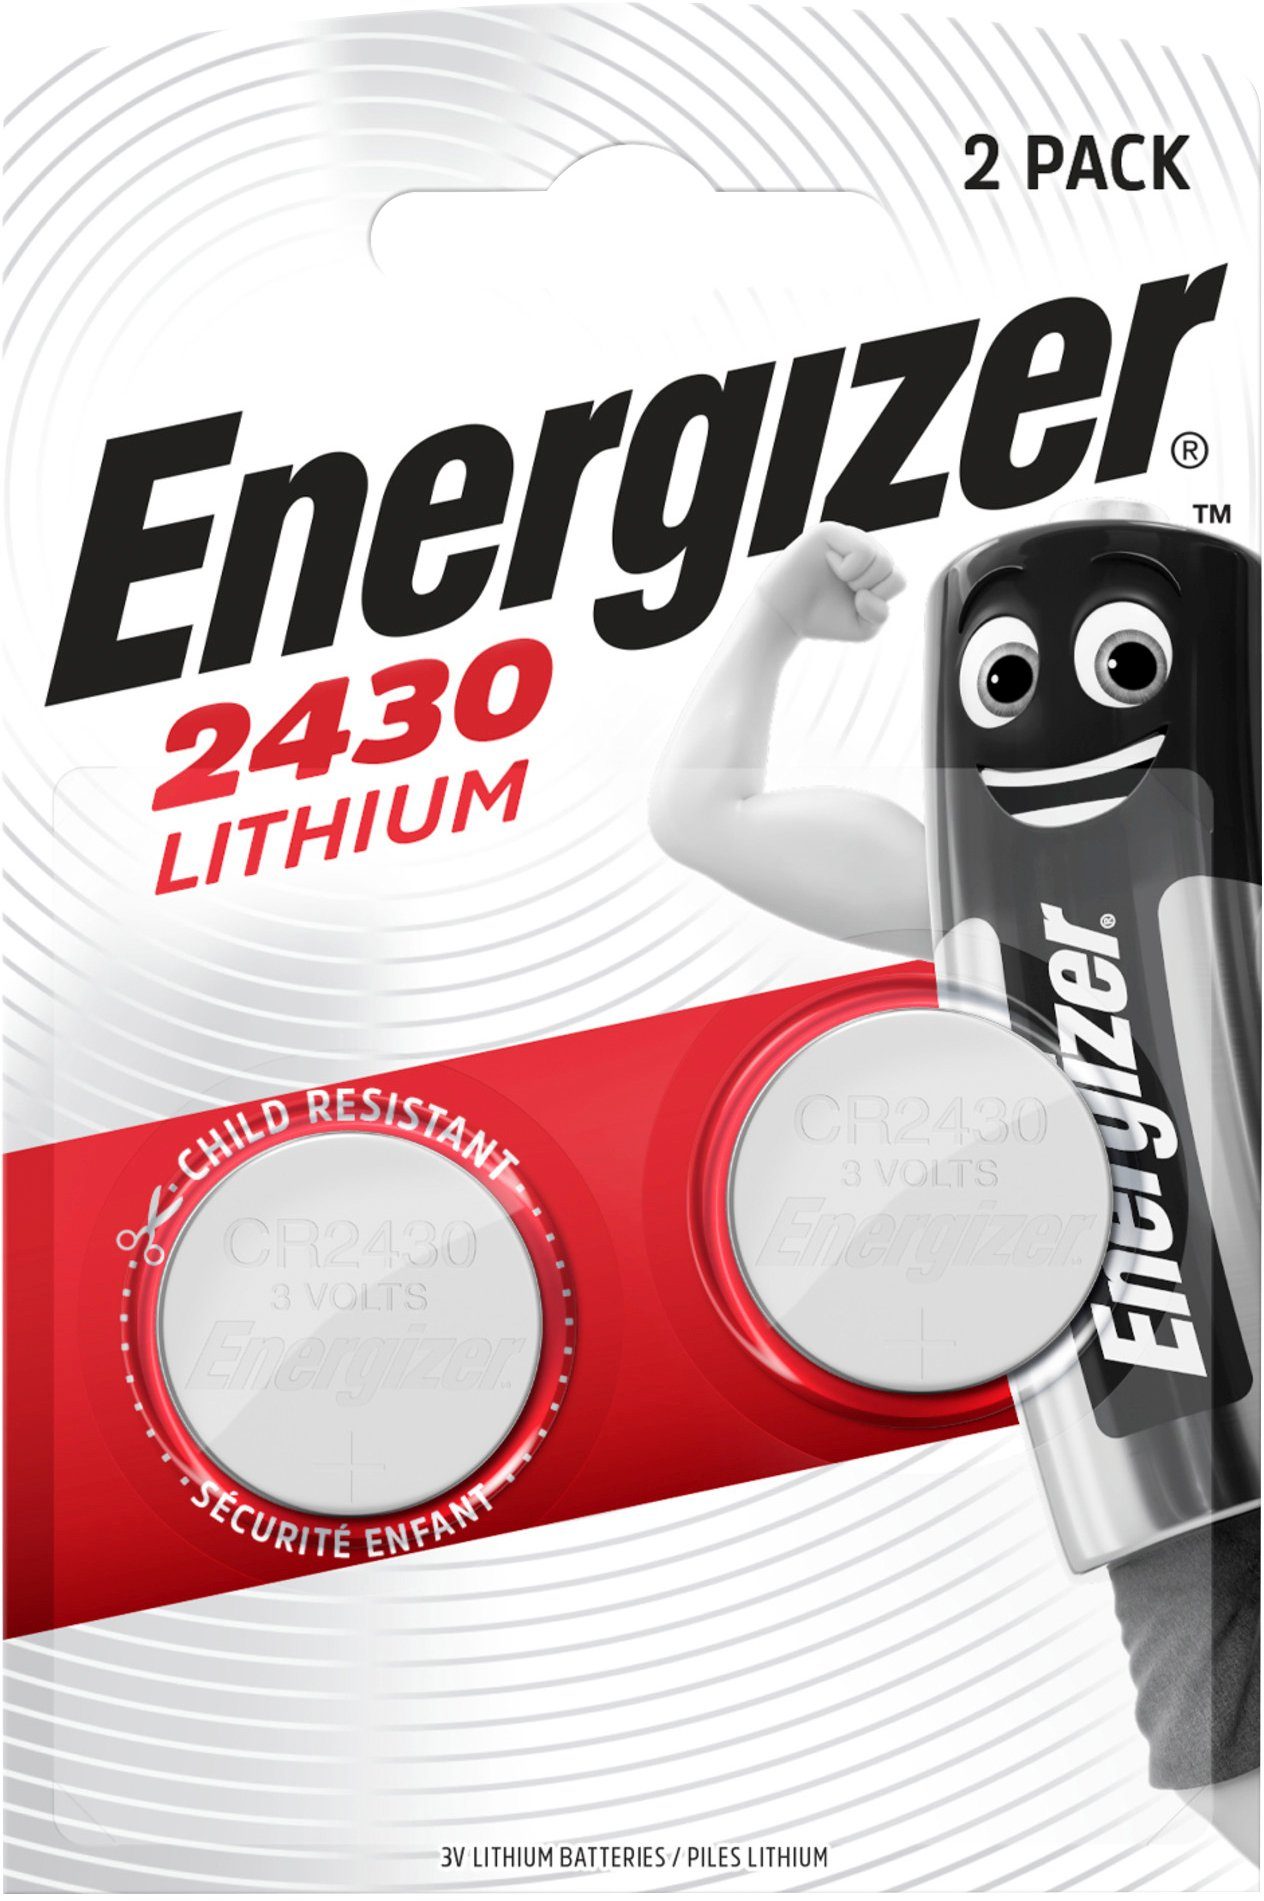 Energizer Lithium CR-Typ 2430 2 Stück Batterie, (3 V) | Batterien